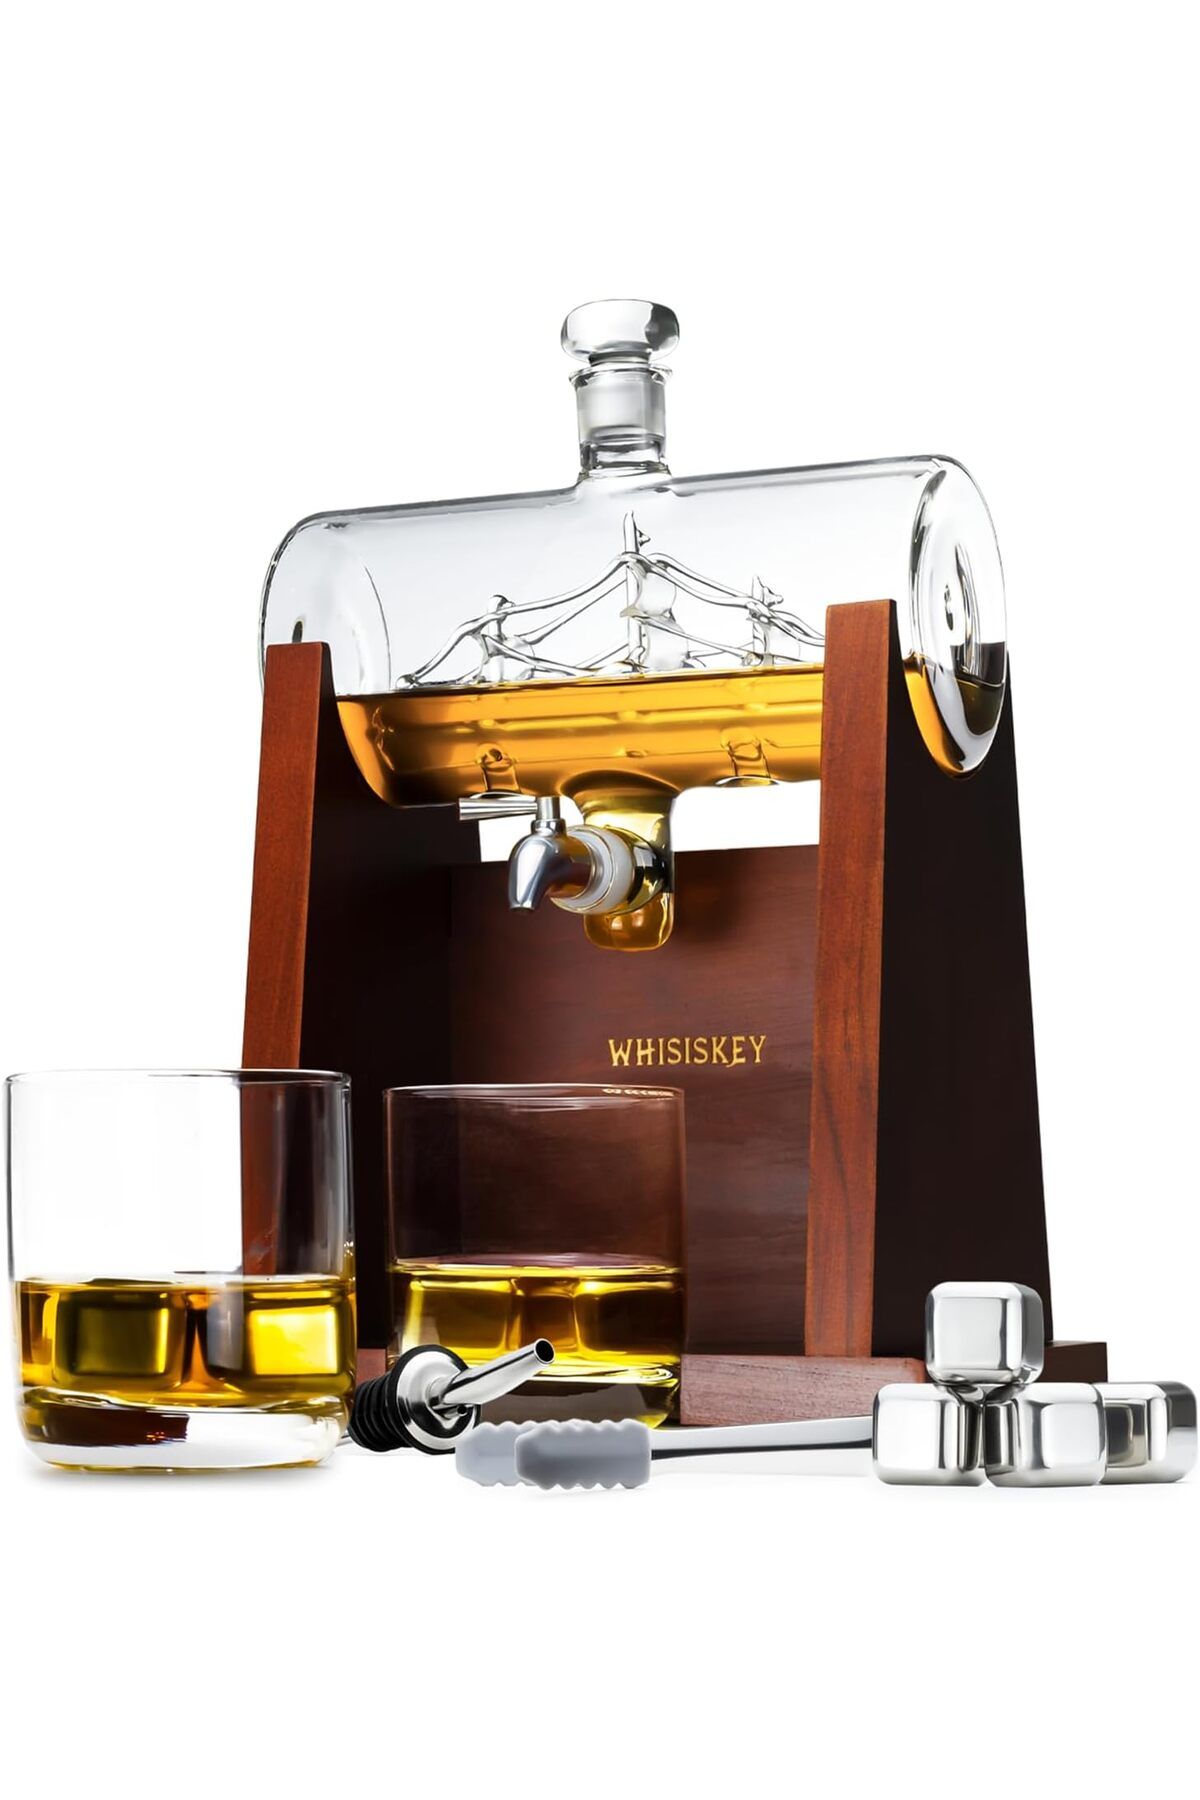 Whisiskey lüks viski sürahi seti, 4 viski taşı, dökme ağzı, musluk ve 2 viski bardağı 1L